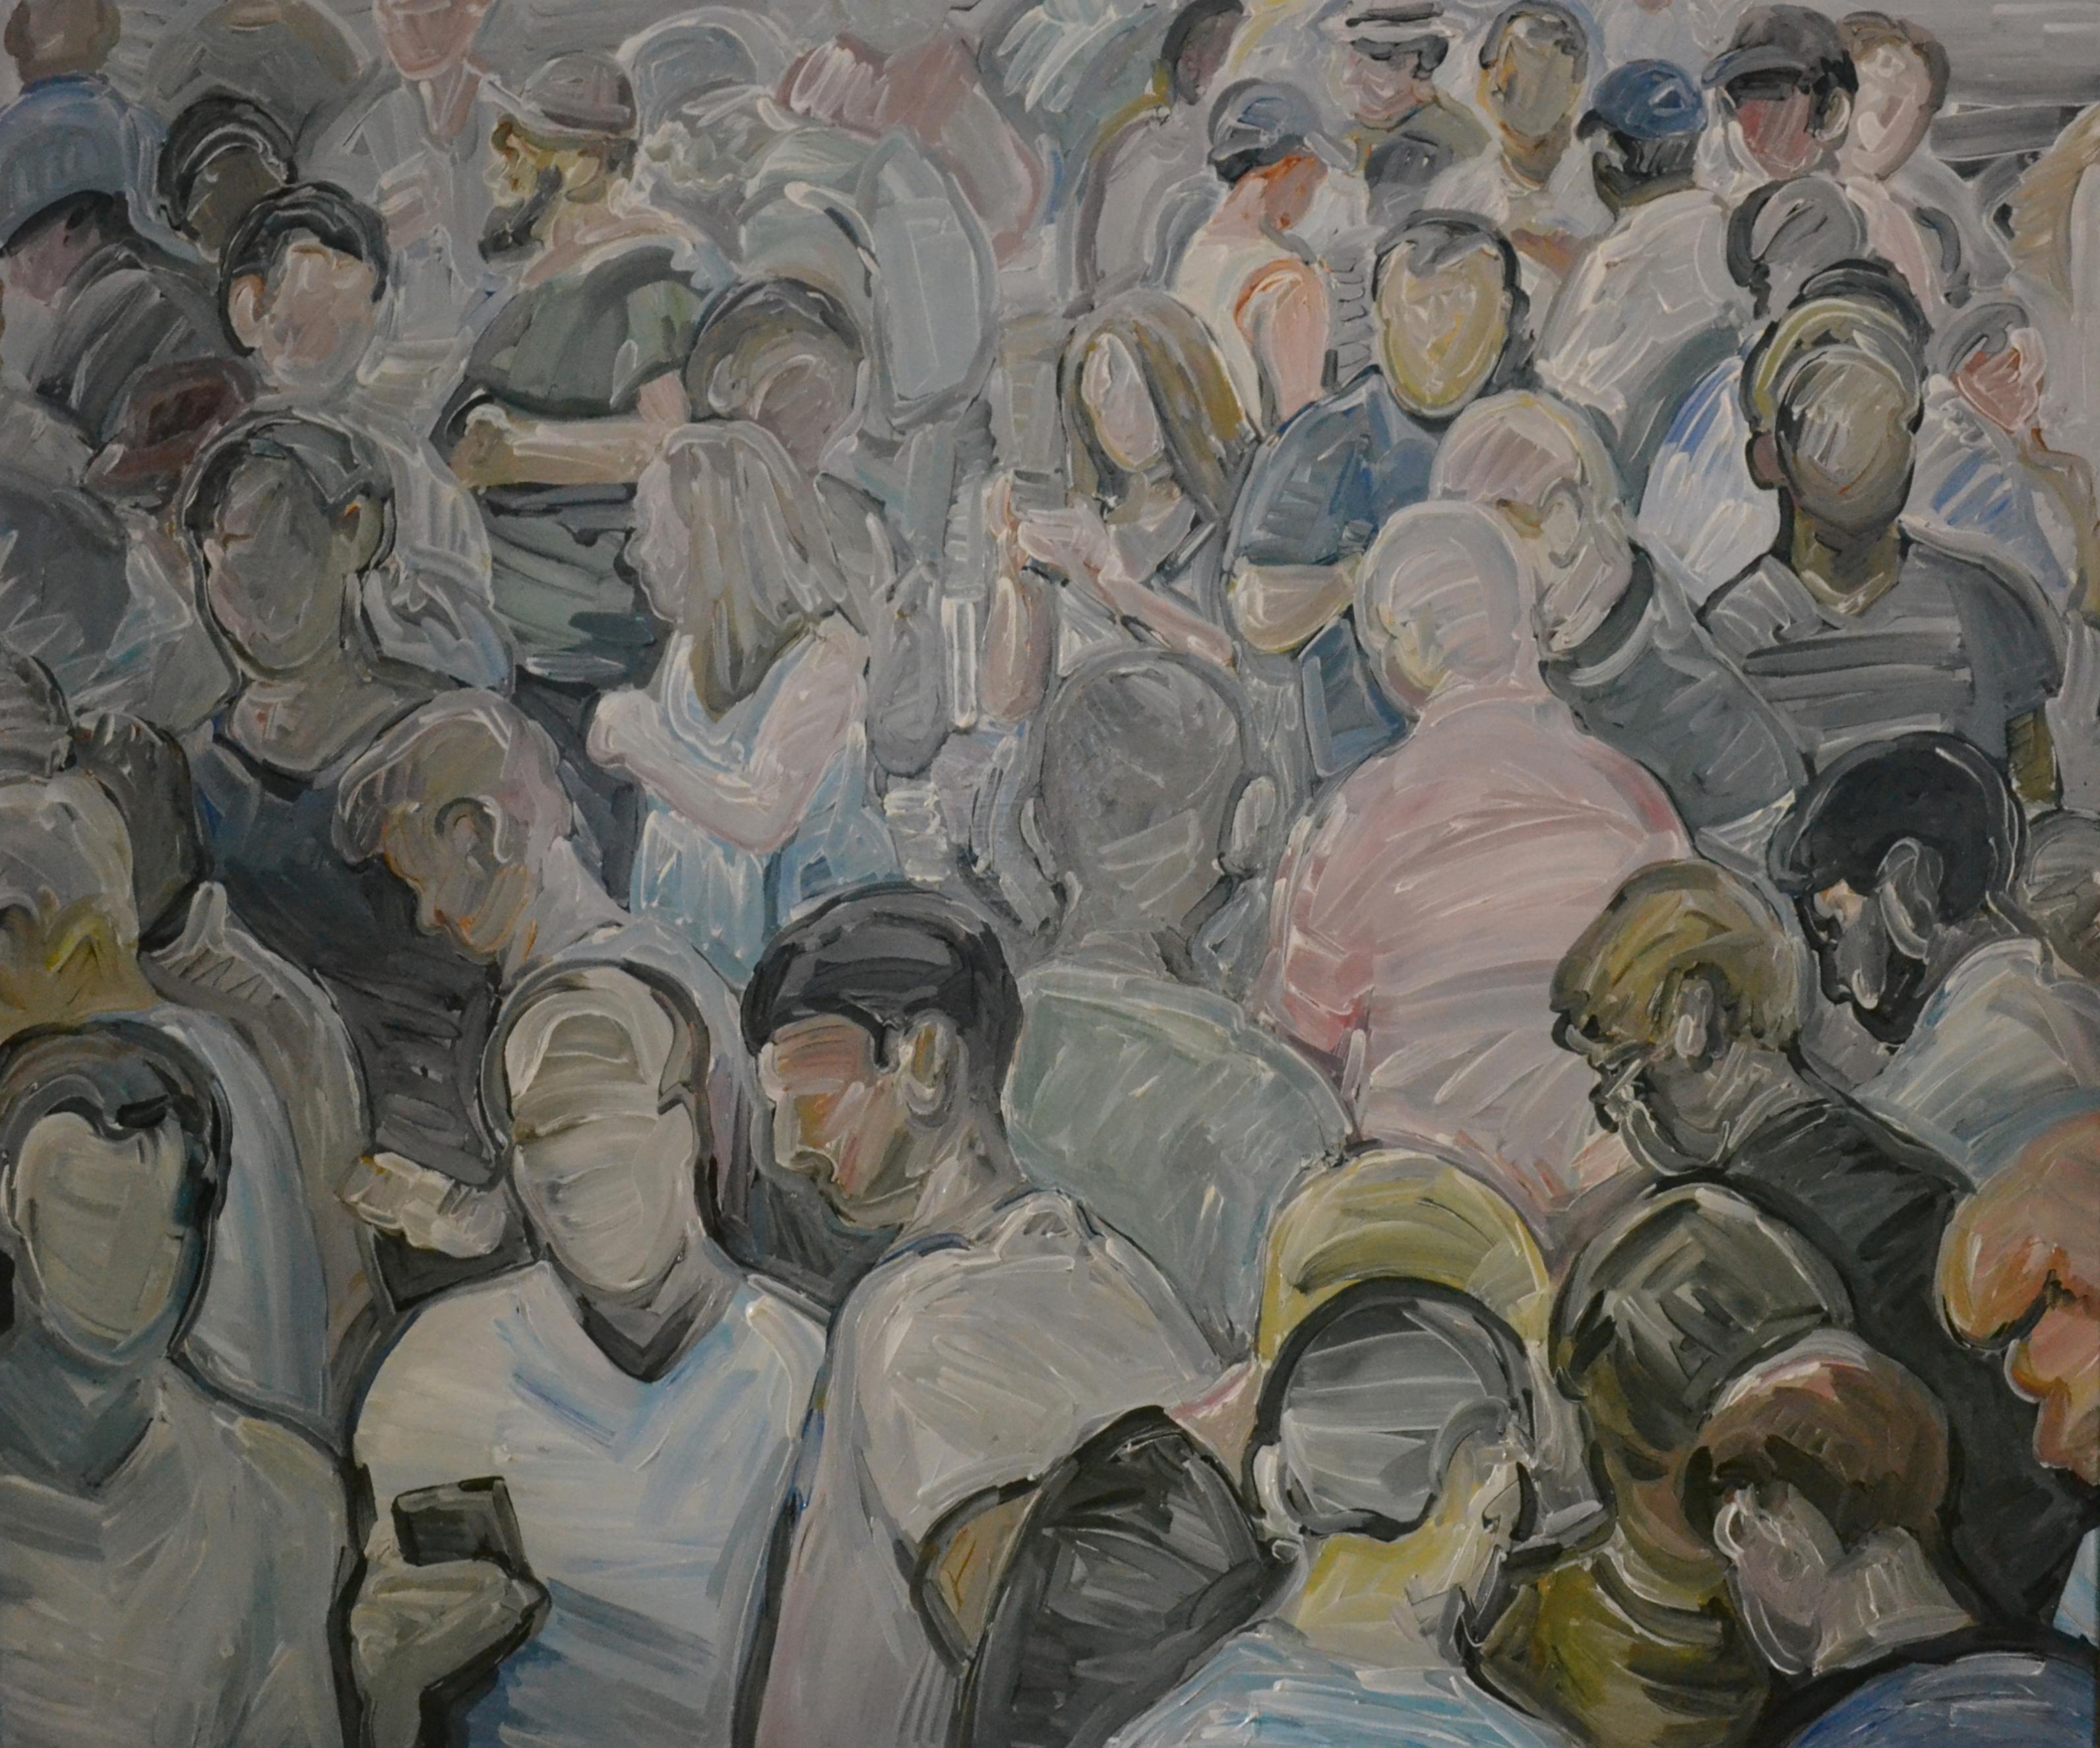 Bartosz Kolata Figurative Painting - Crowd - People Portrait, Contemporary Expressive Figurative Oil Painting, XL